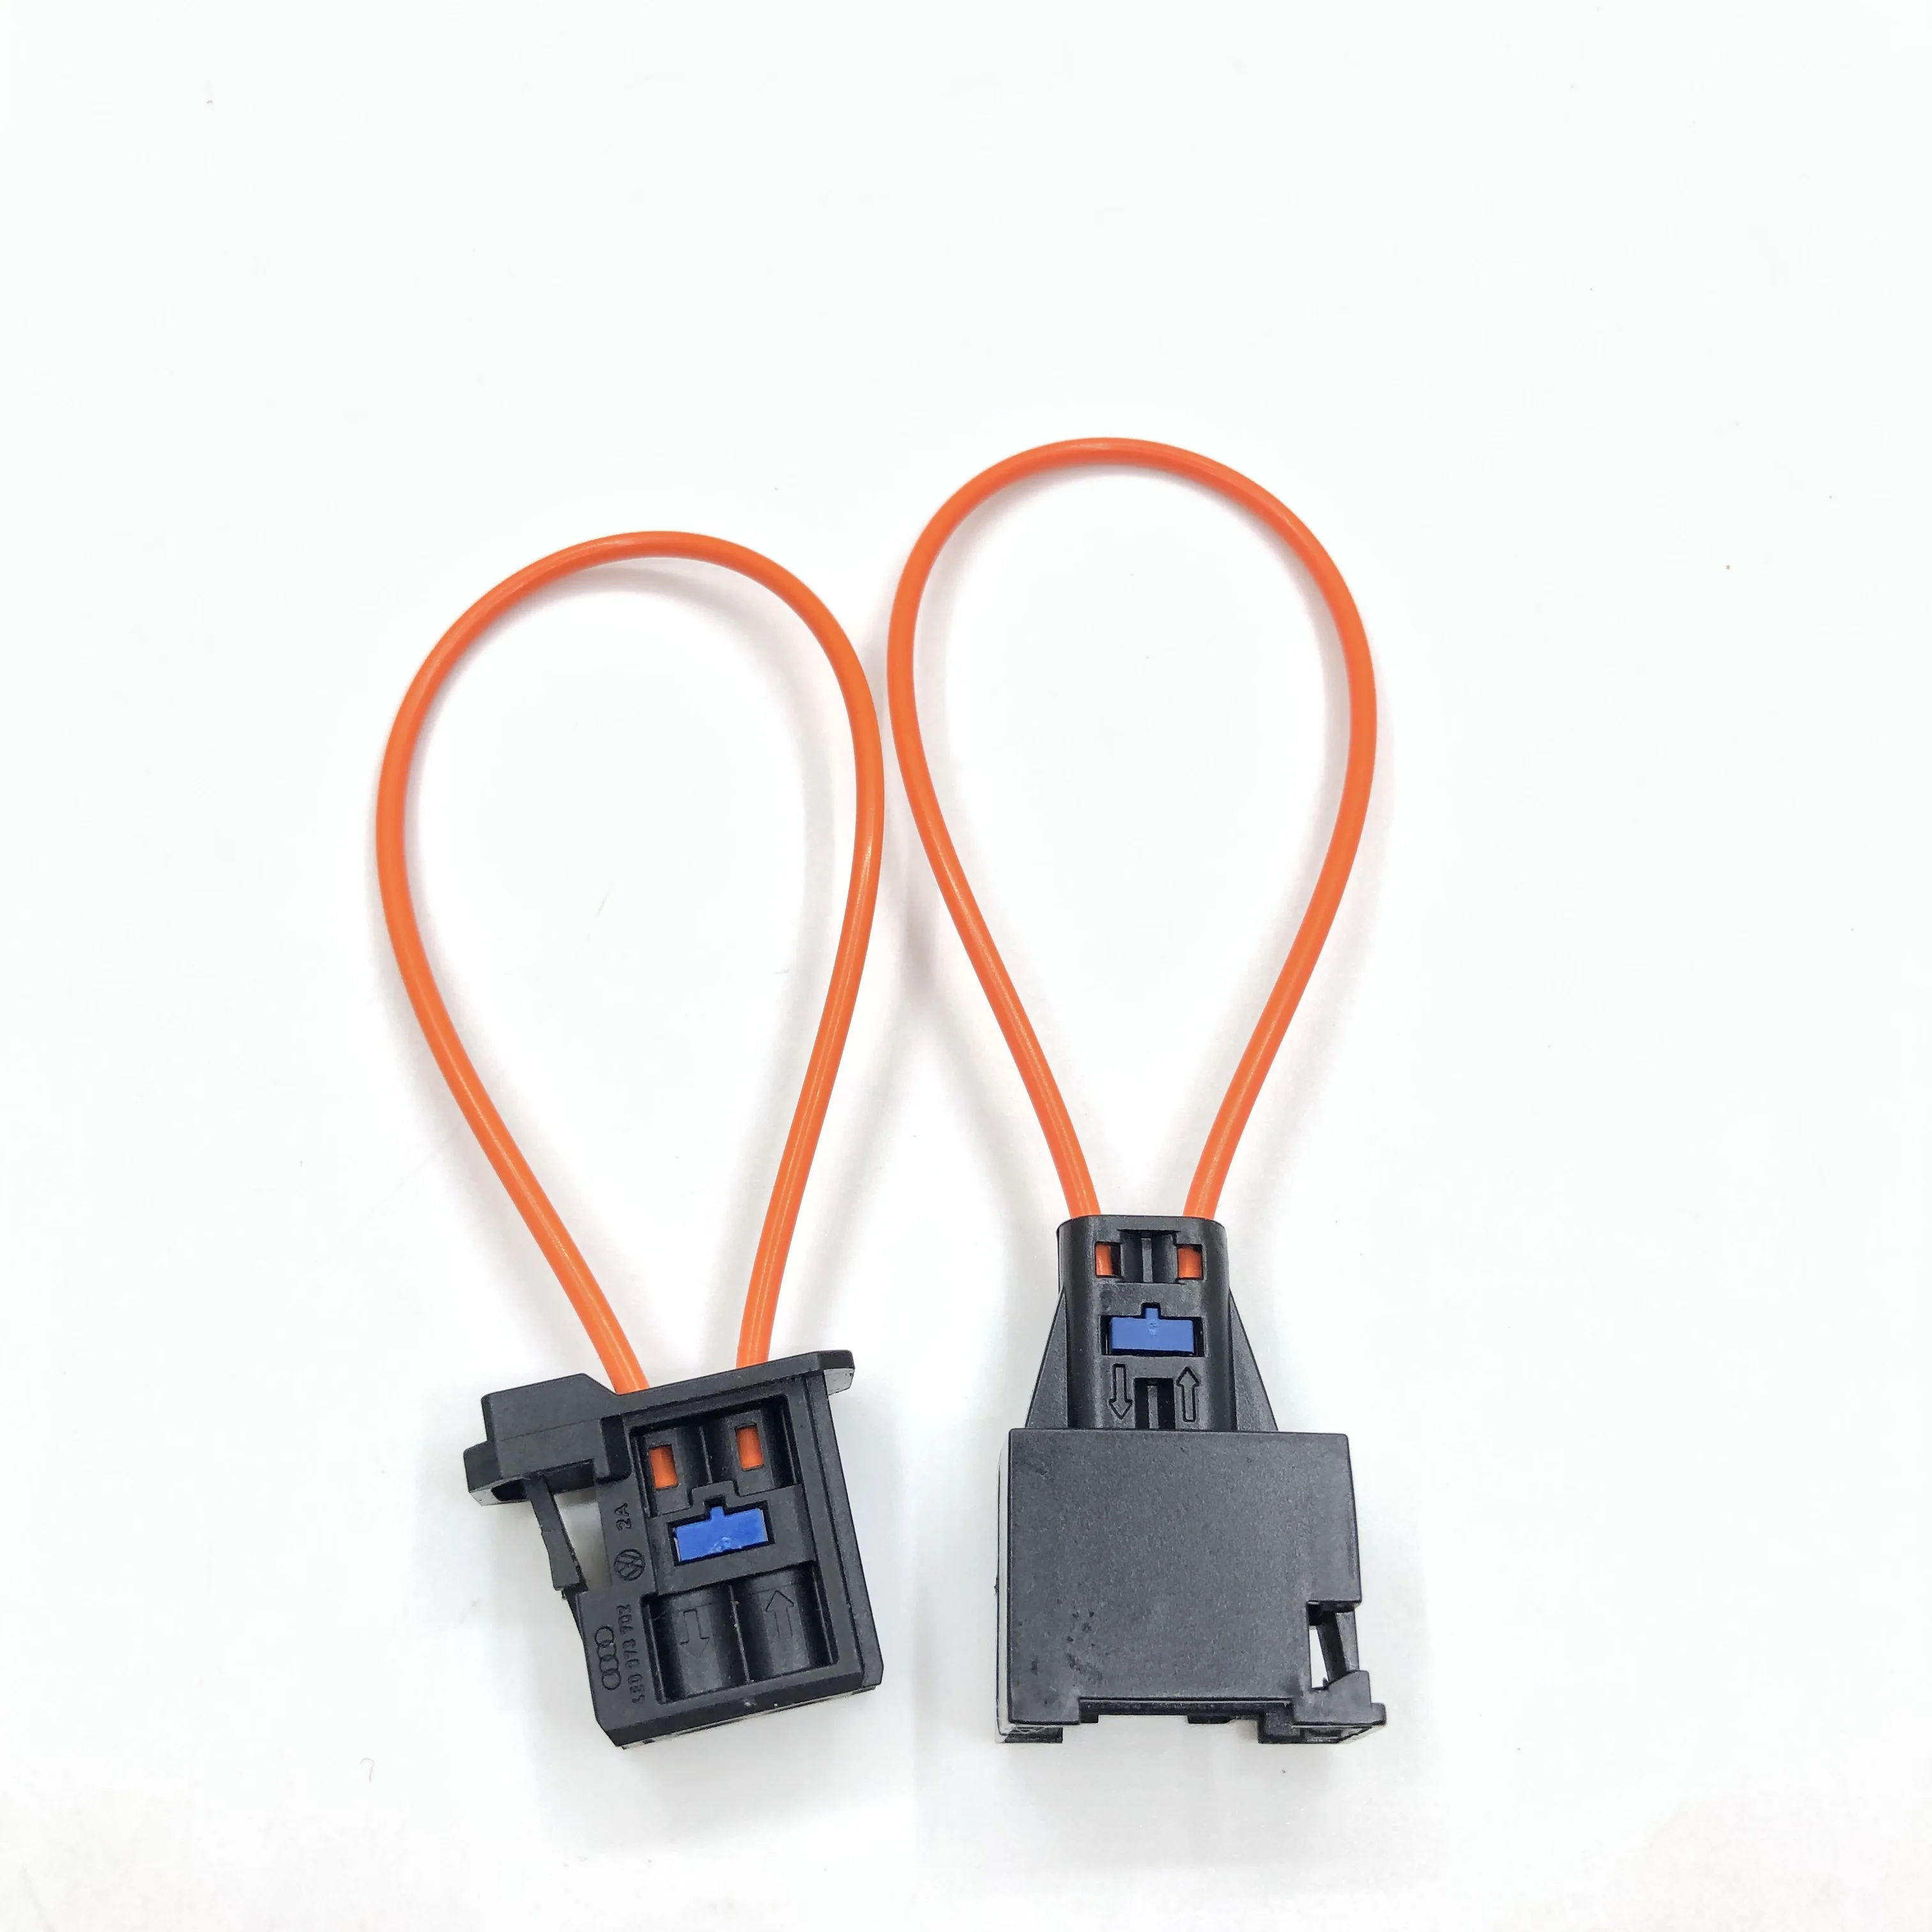 DIE MEISTEN Optical Fiber Optic Schleife Anschluss Diagnose Werkzeug Kabel Steckdosen Adapter Für VW Polo Golf Audi A4 A6 BMW F30 f18 BENZ